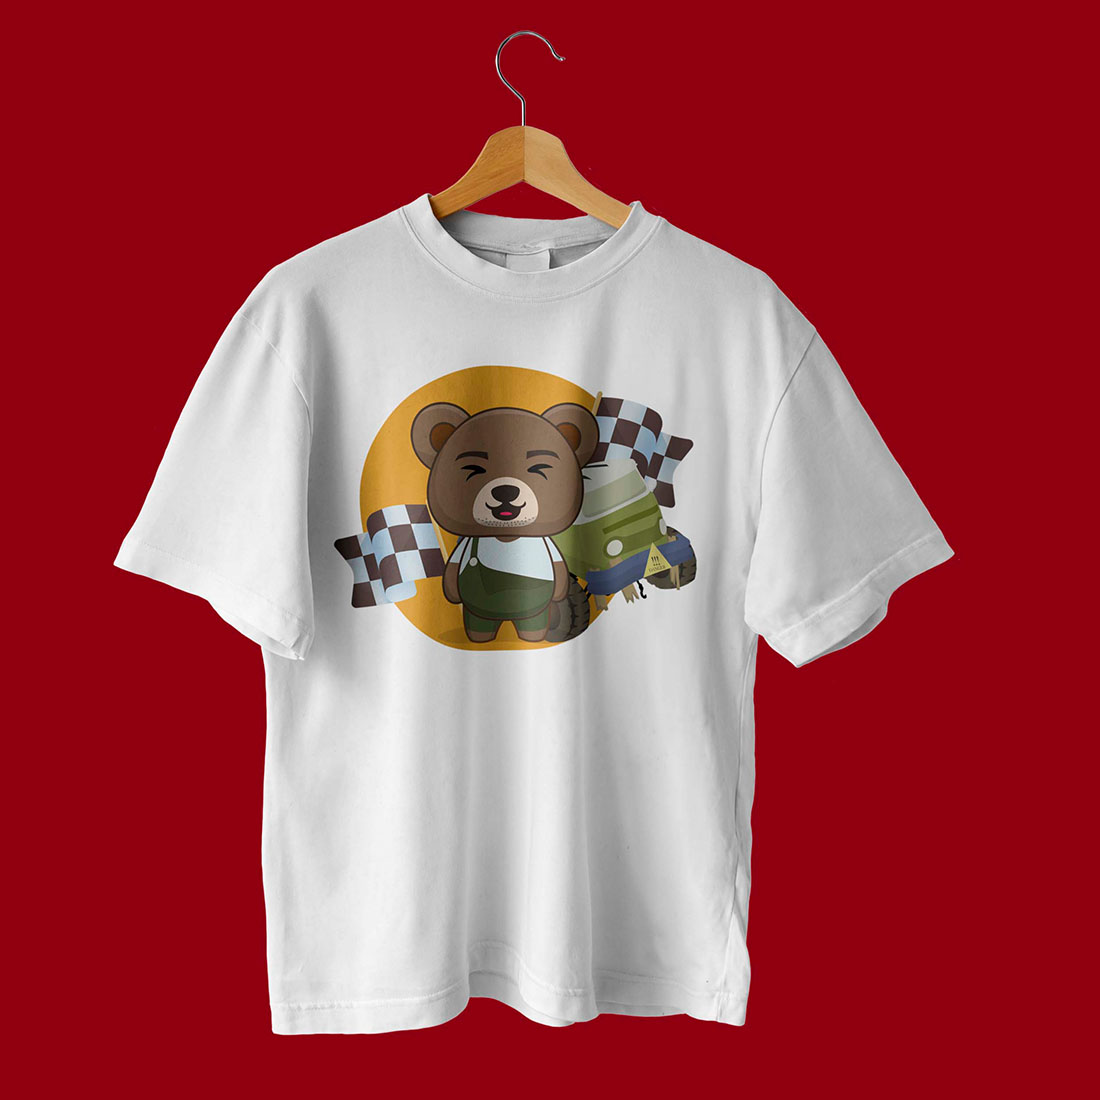 Cute Bear Illustration T-shirt cover image.